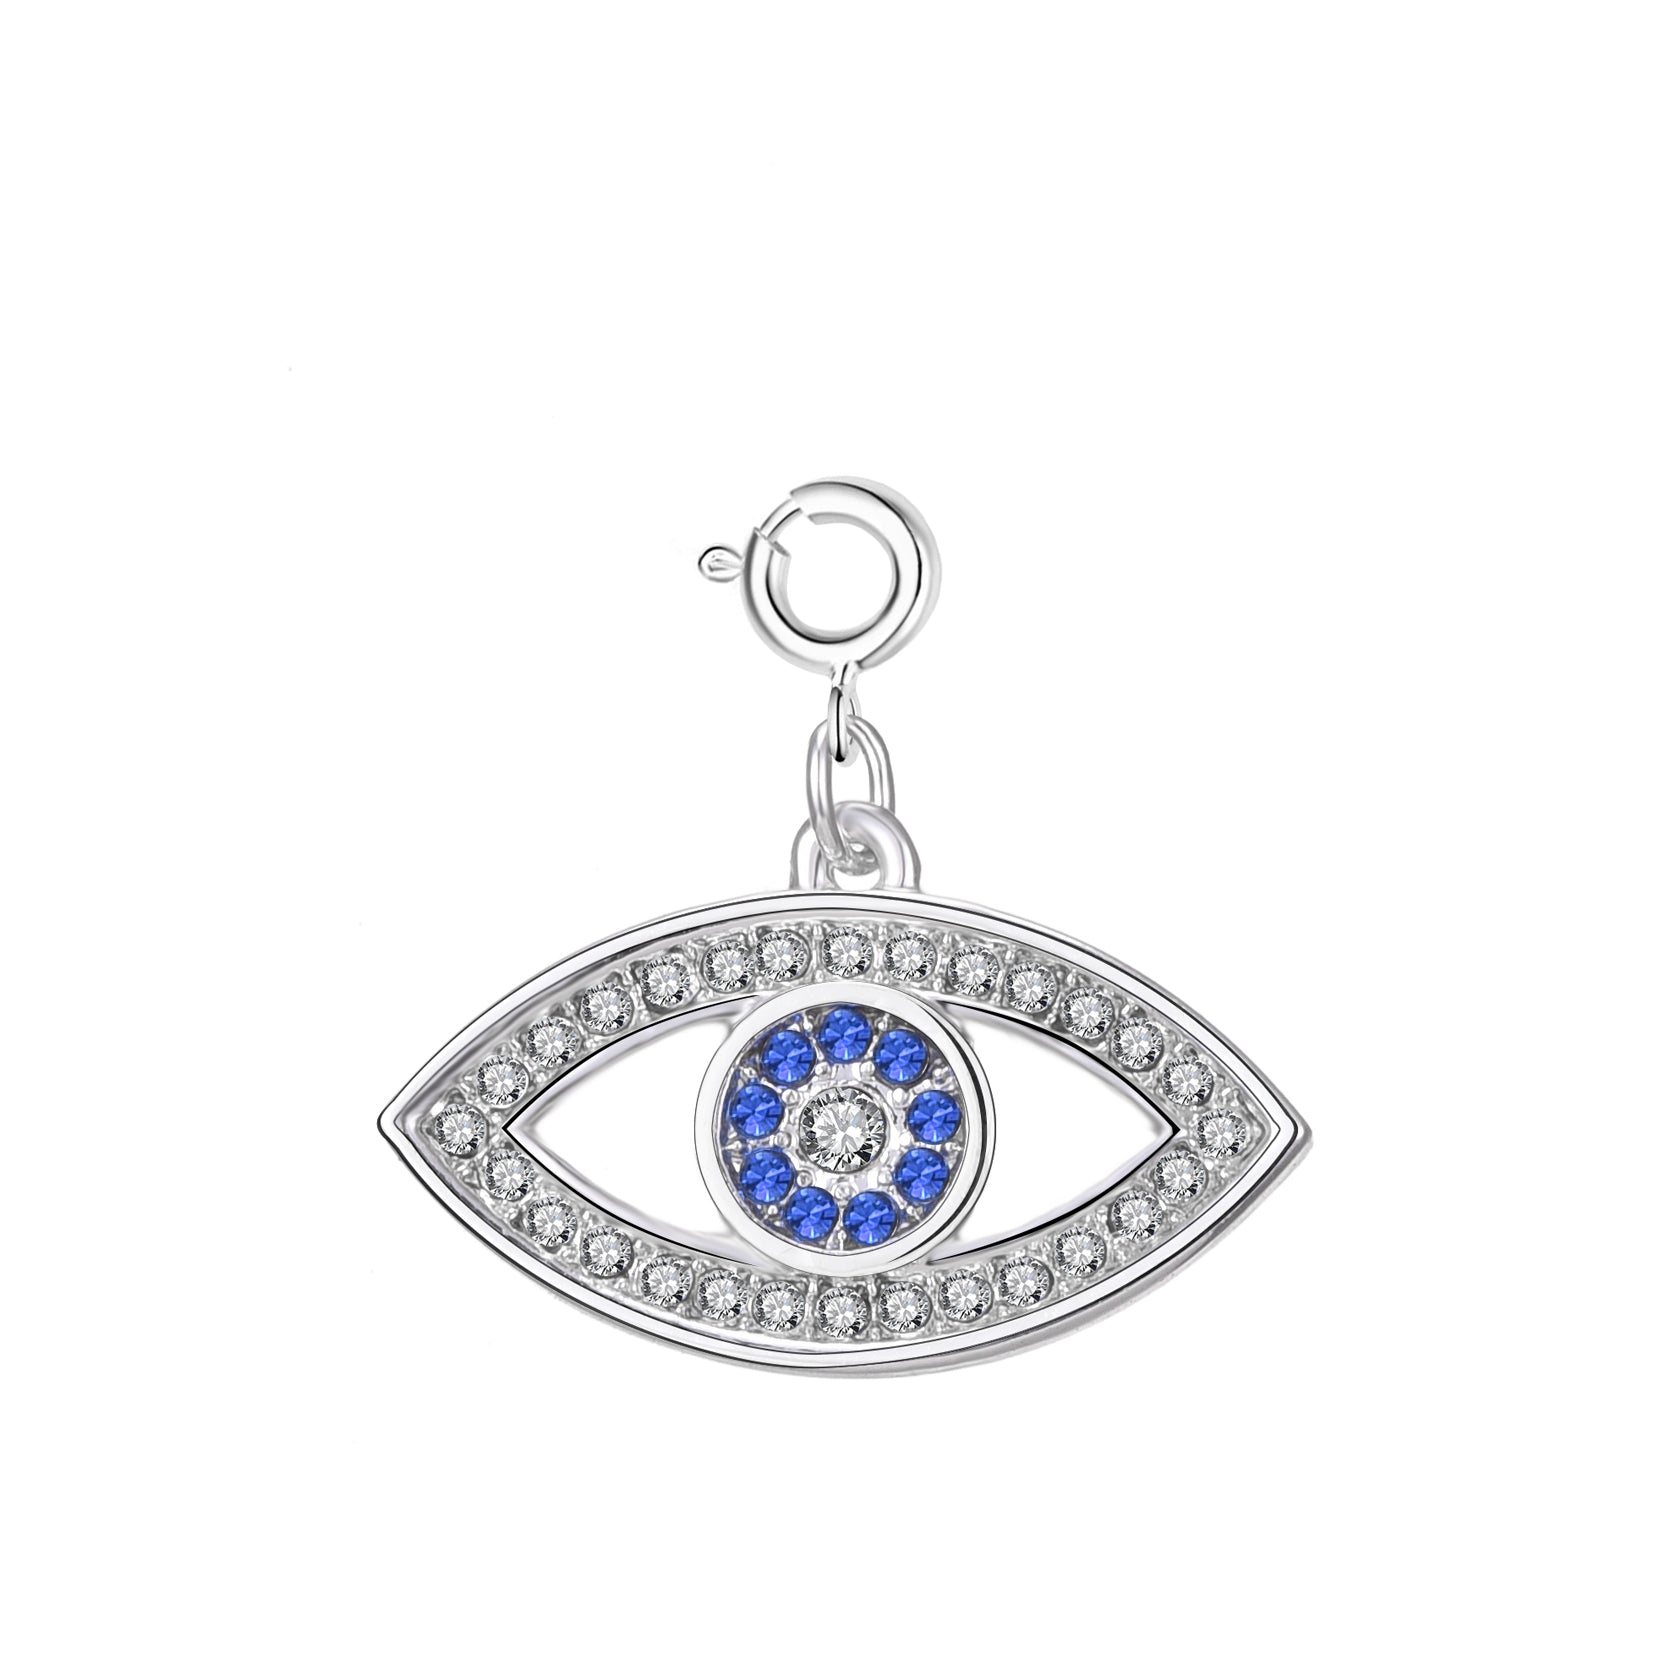 Evil Eye Charm Created with Zircondia® Crystals by Philip Jones Jewellery